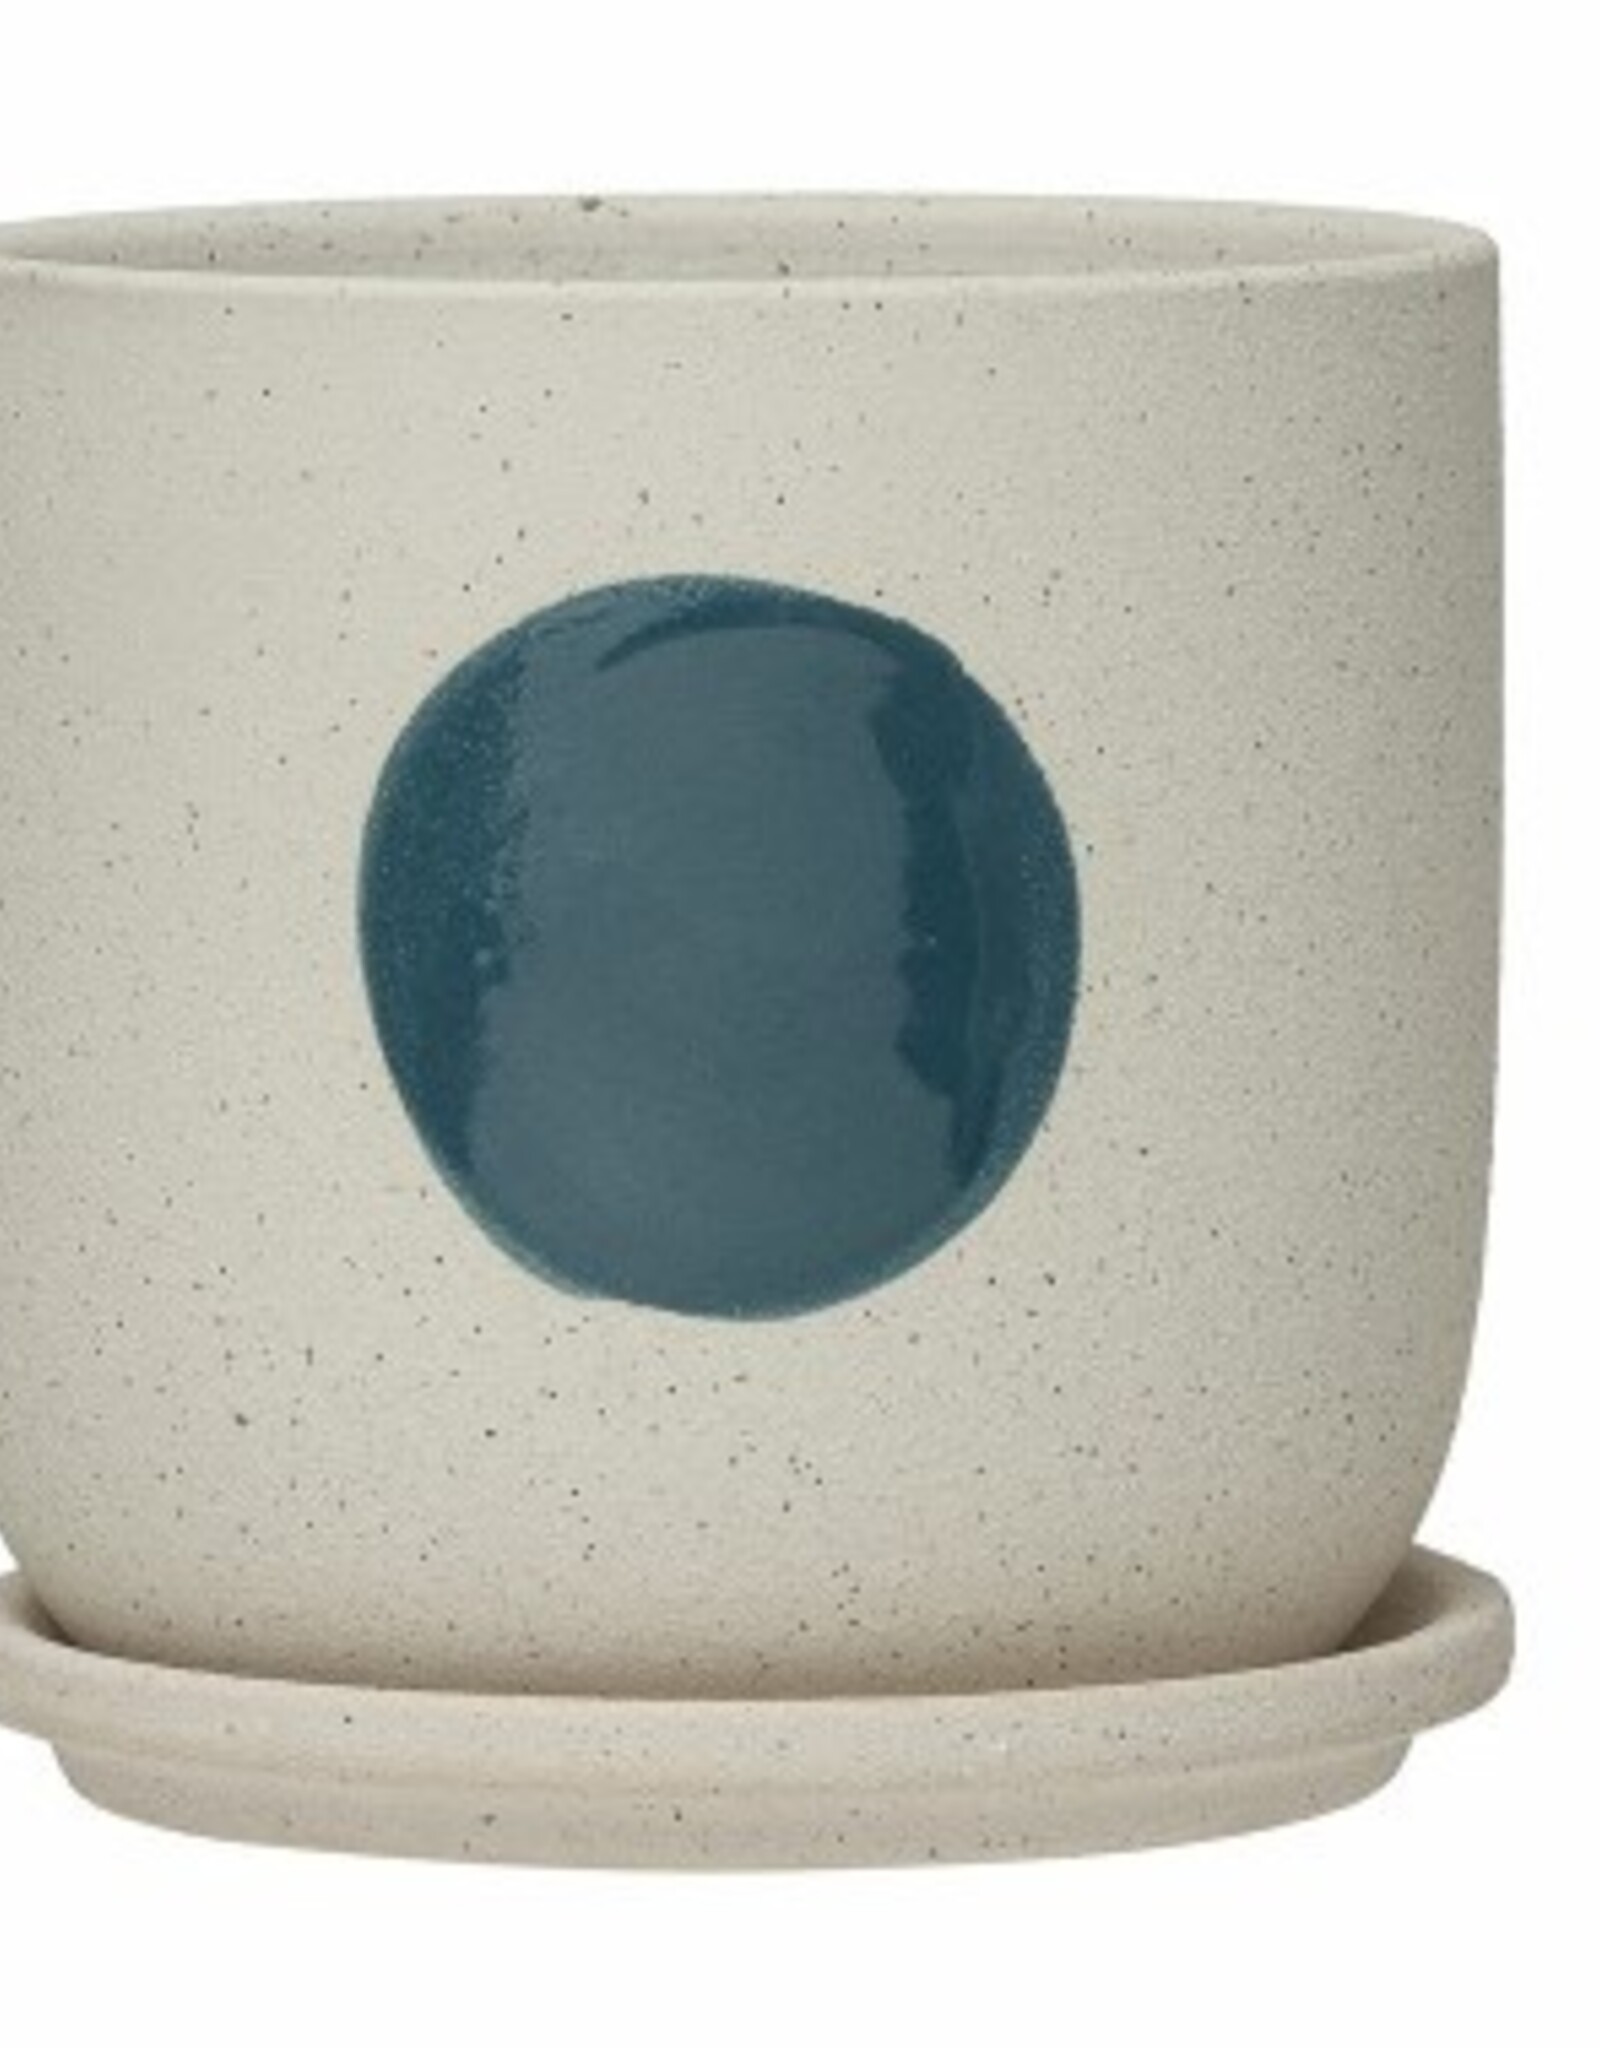 Creative Co-Op Planter - Large: White Stoneware  w/ Blue Circle